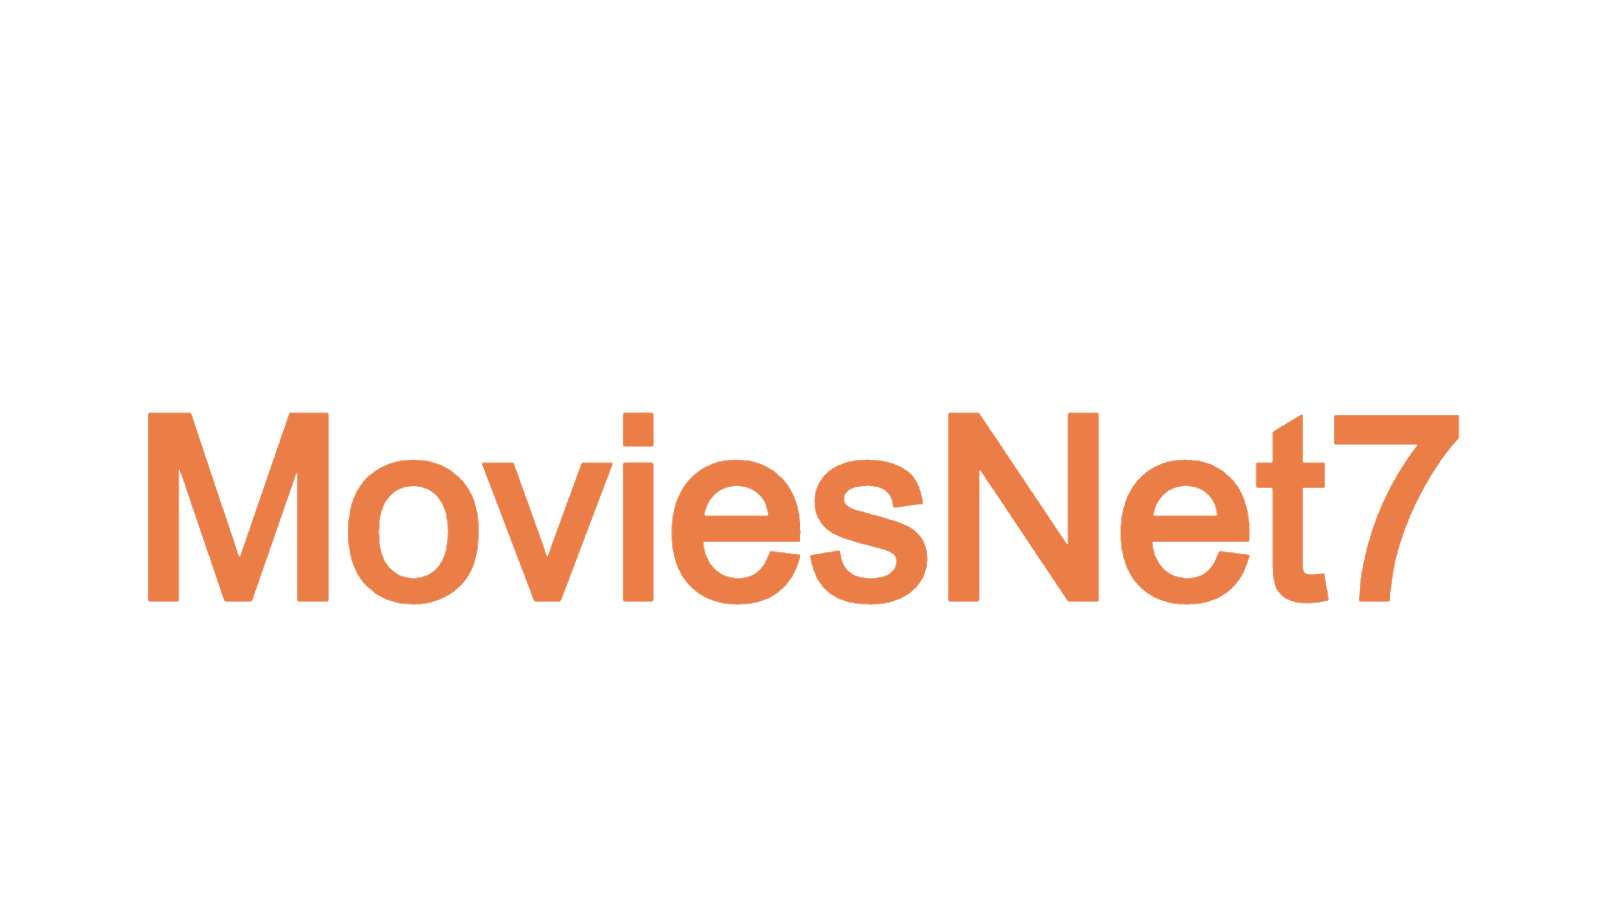 Moviesnet7